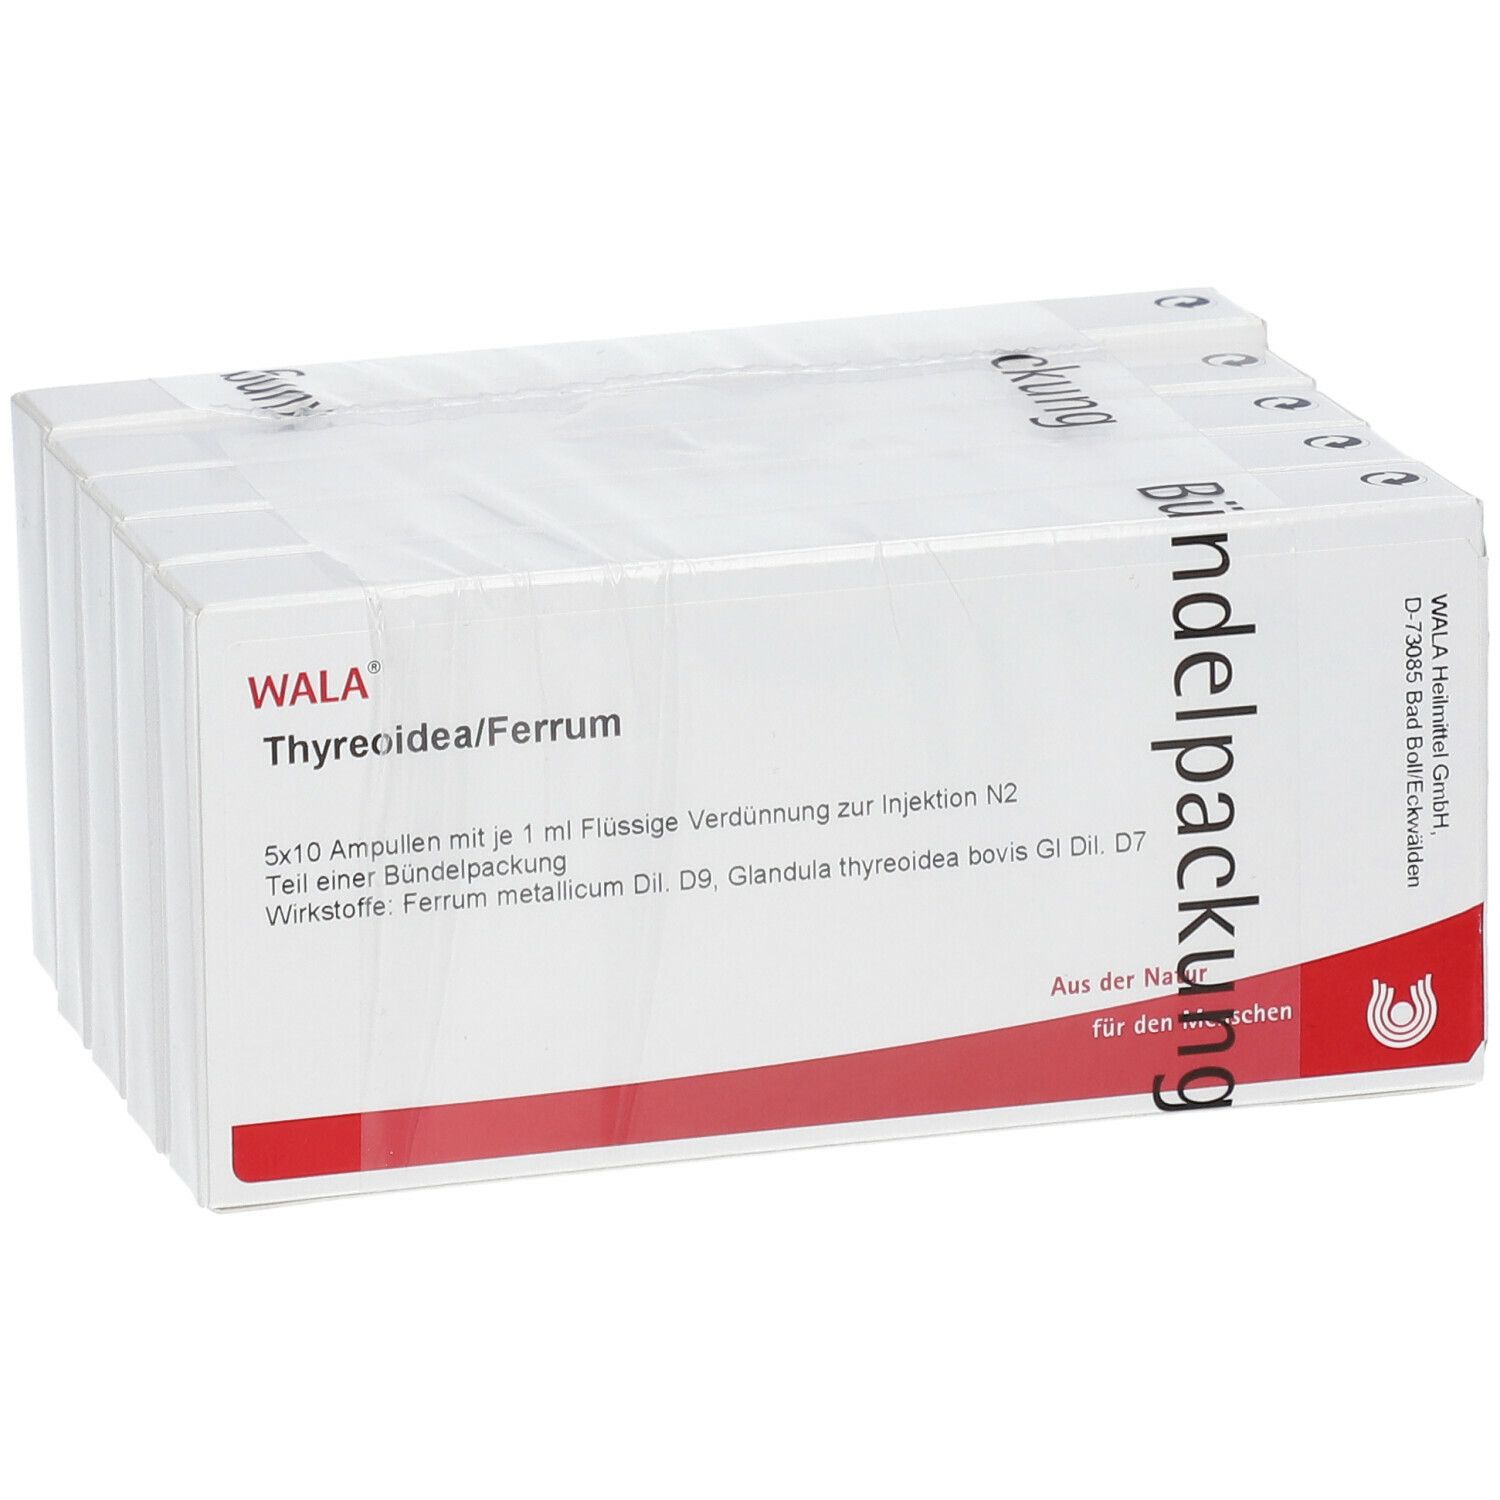 WALA® Thyreoidea Ferrum Amp.